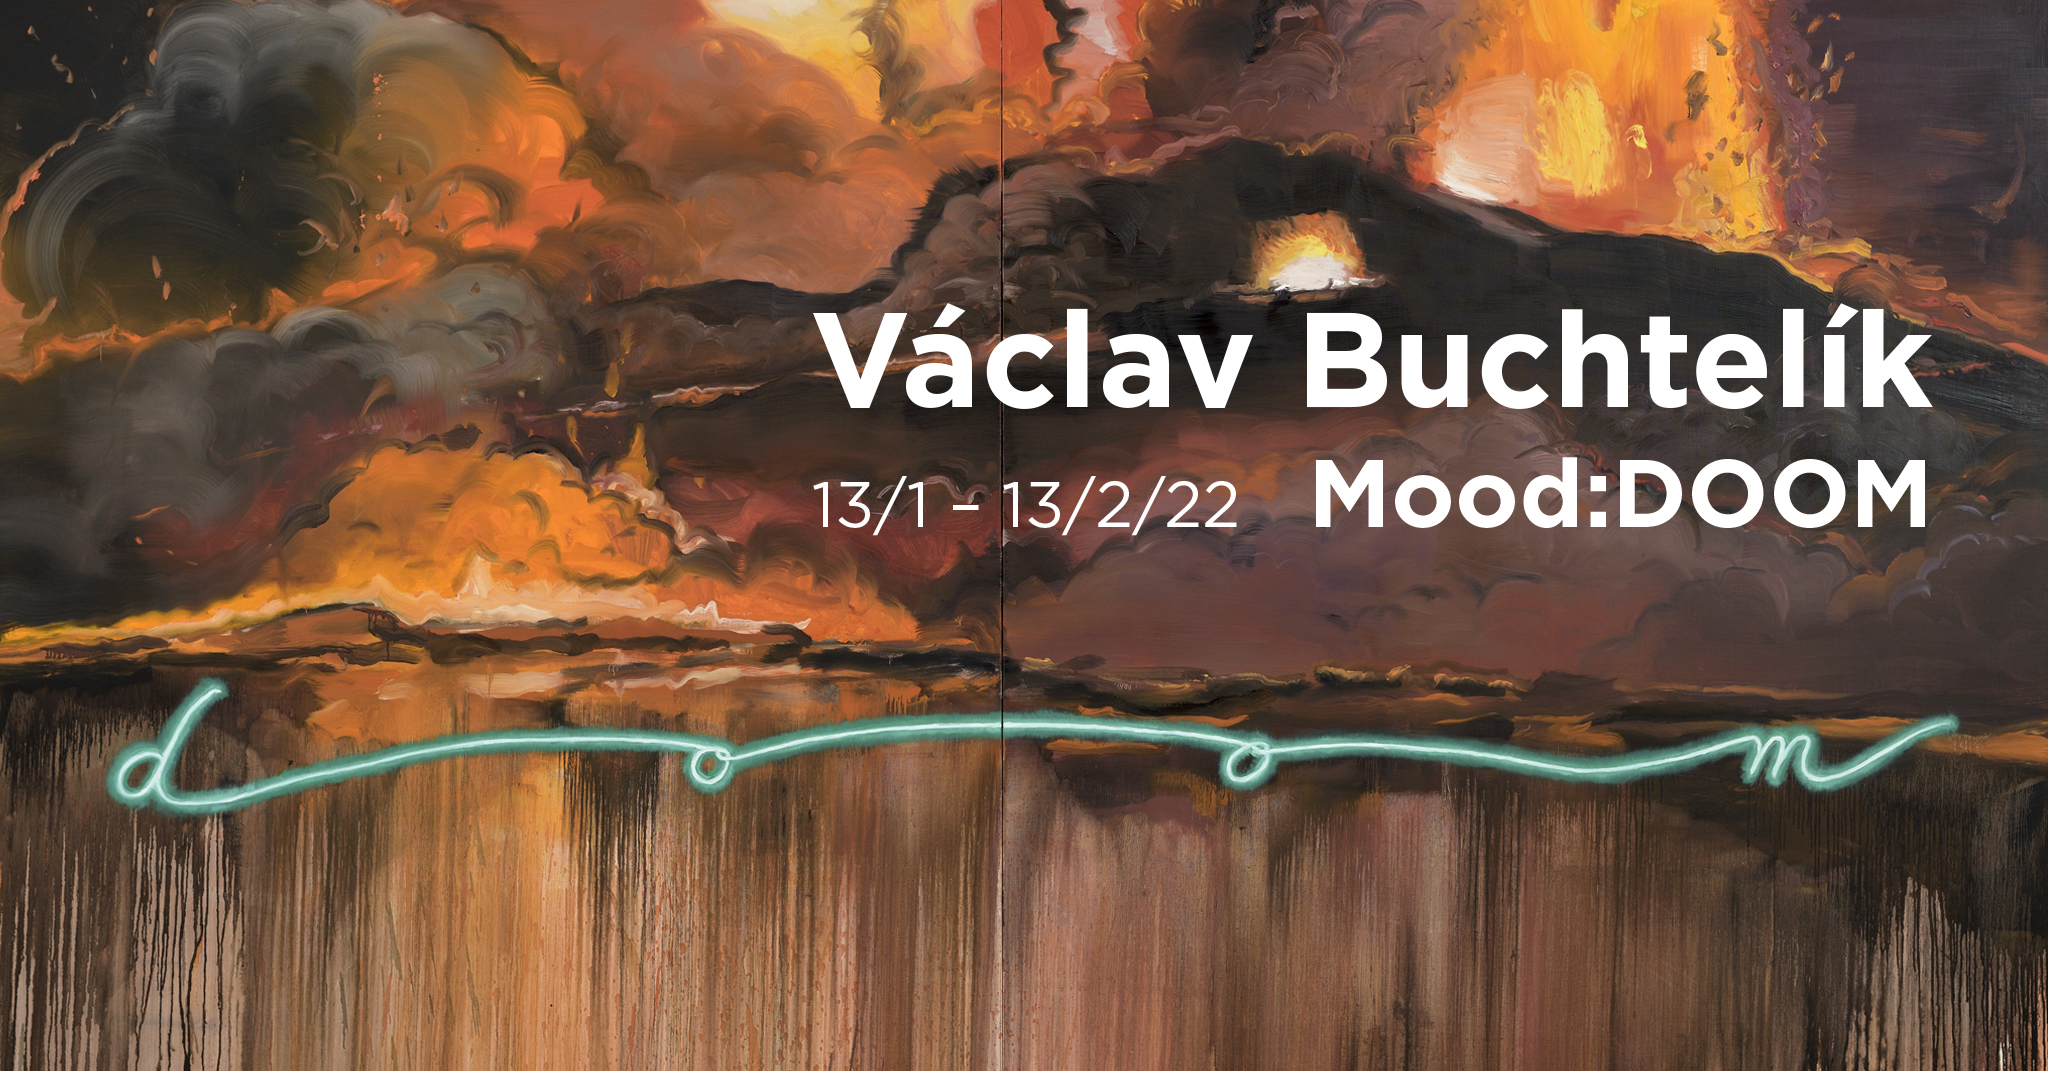 Václav Buchtelík - Mood: DOOM- výstava v Bold Gallery Praha -Bold Gallery